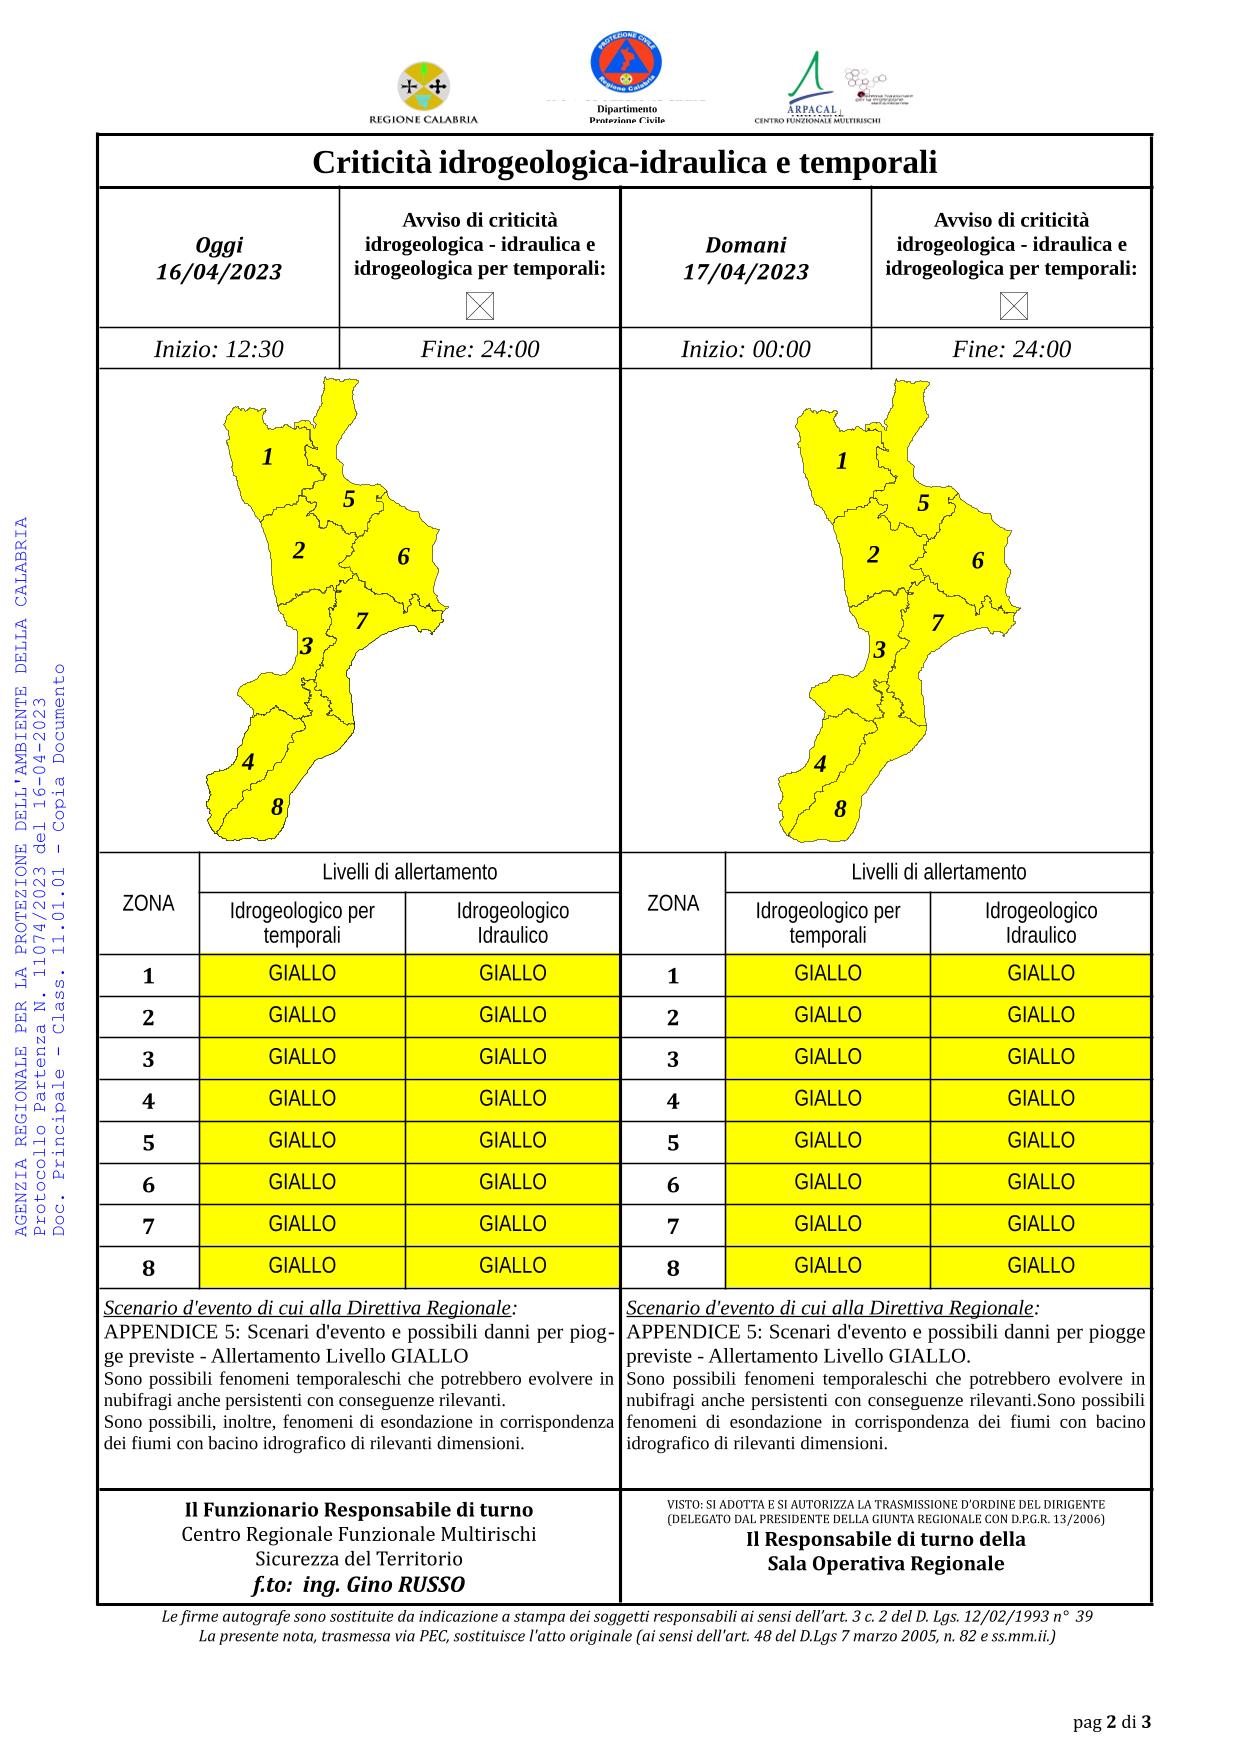 Criticità idrogeologica-idraulica e temporali in Calabria 16-04-2023